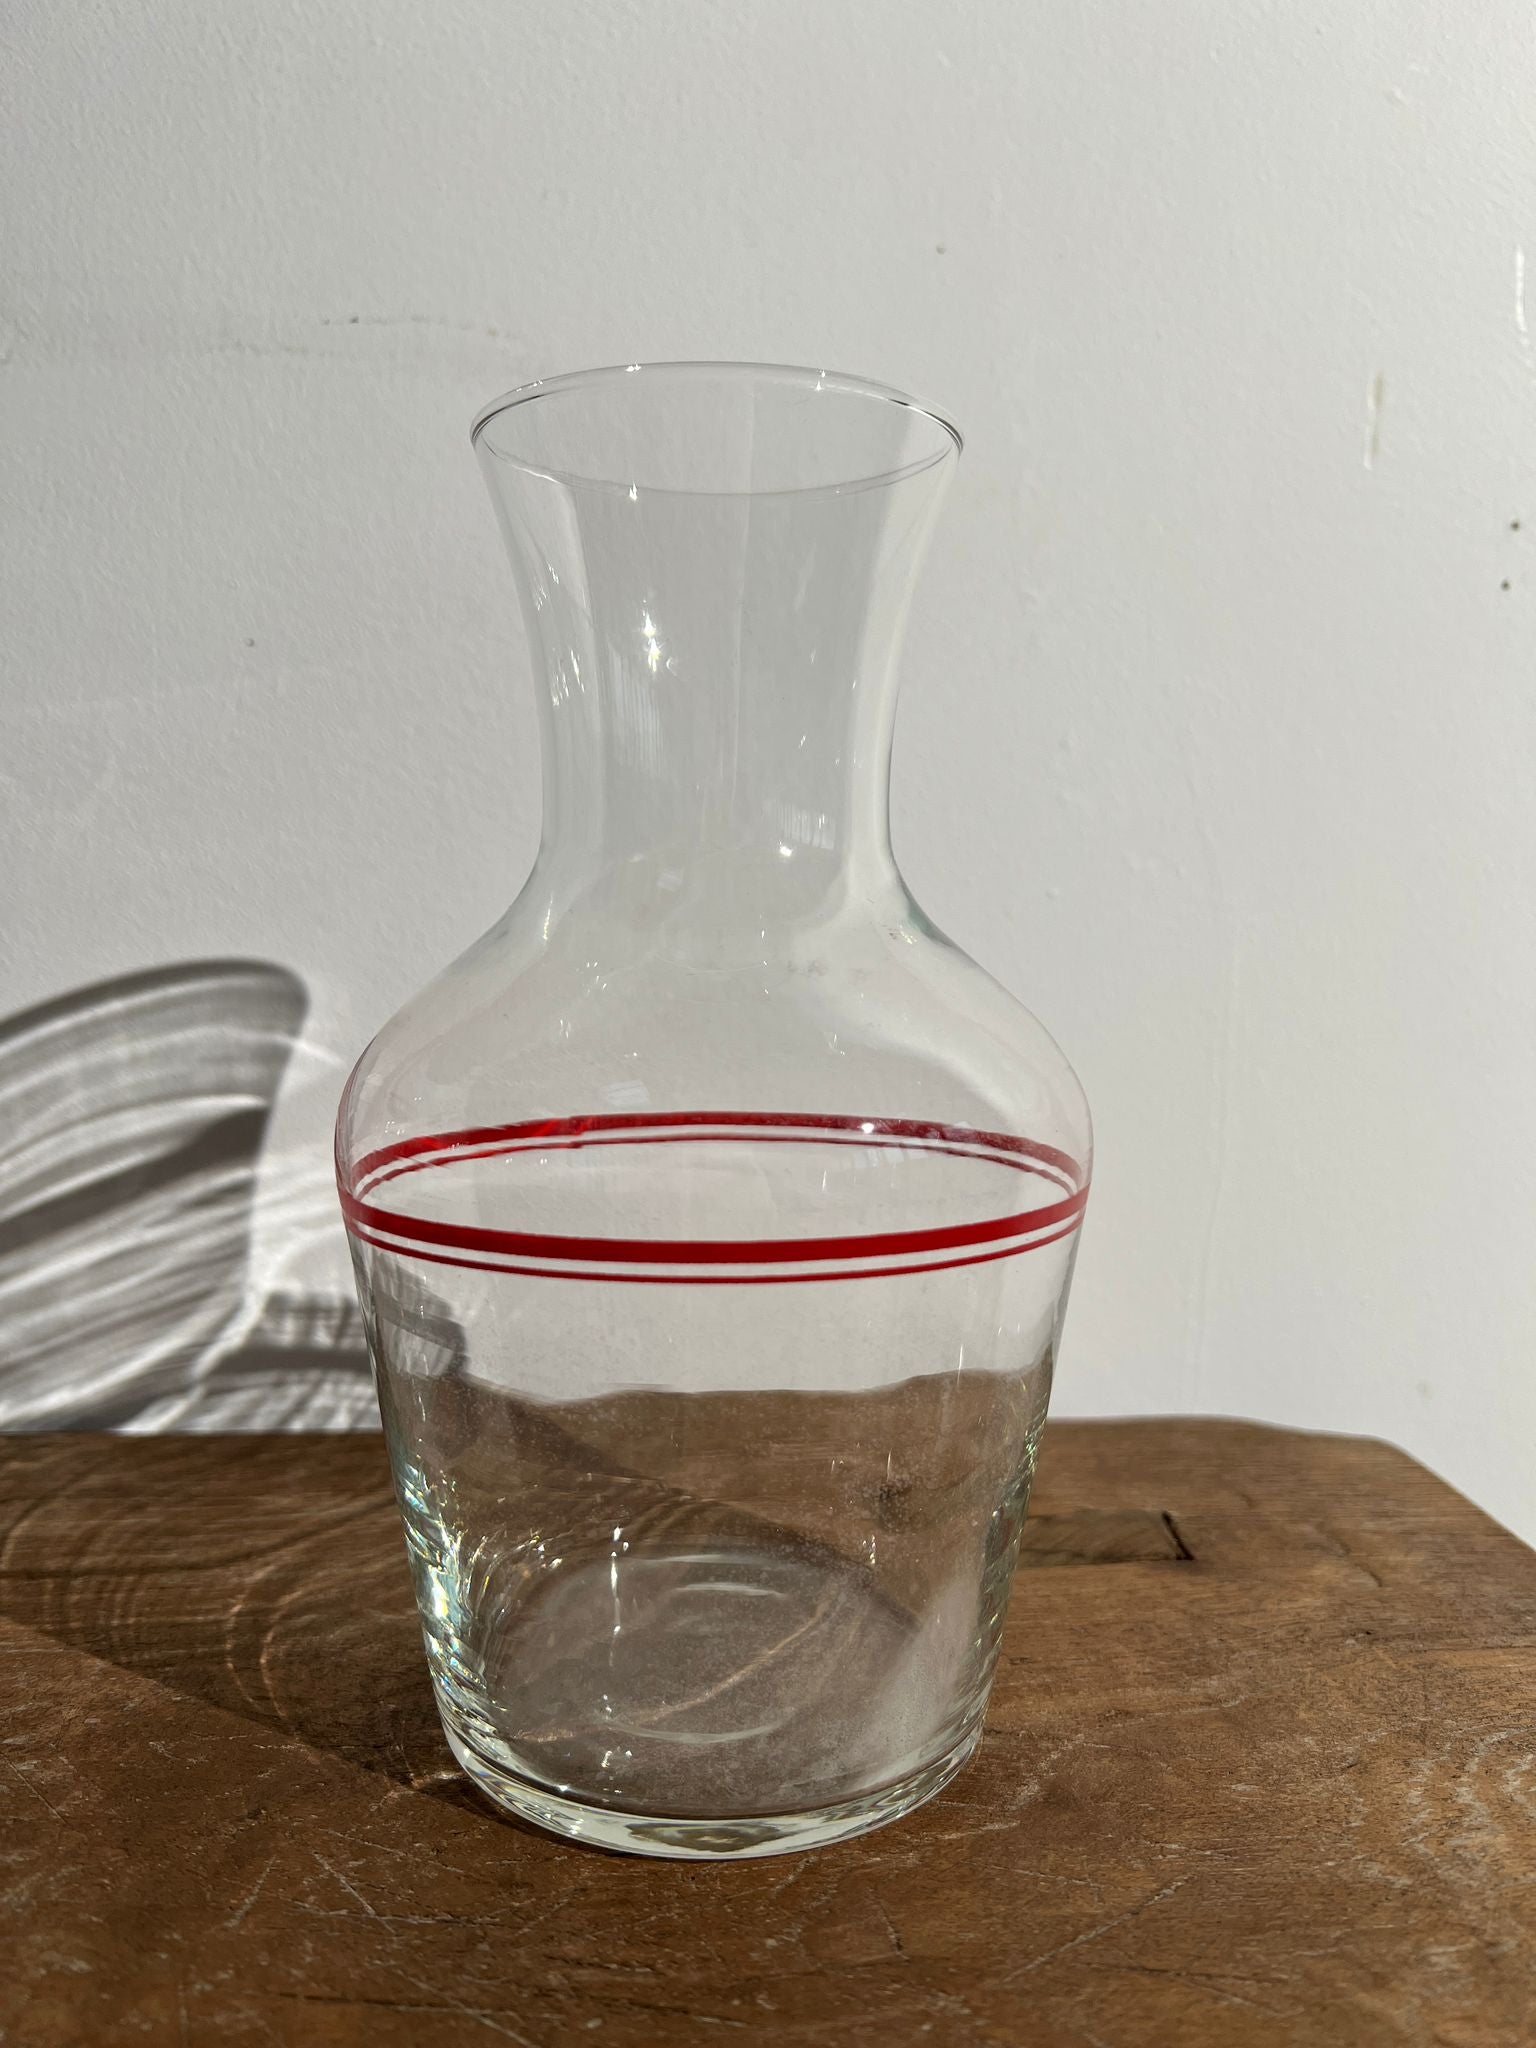 Carafe vintage en verre à liseré rouge et ses 6 verres